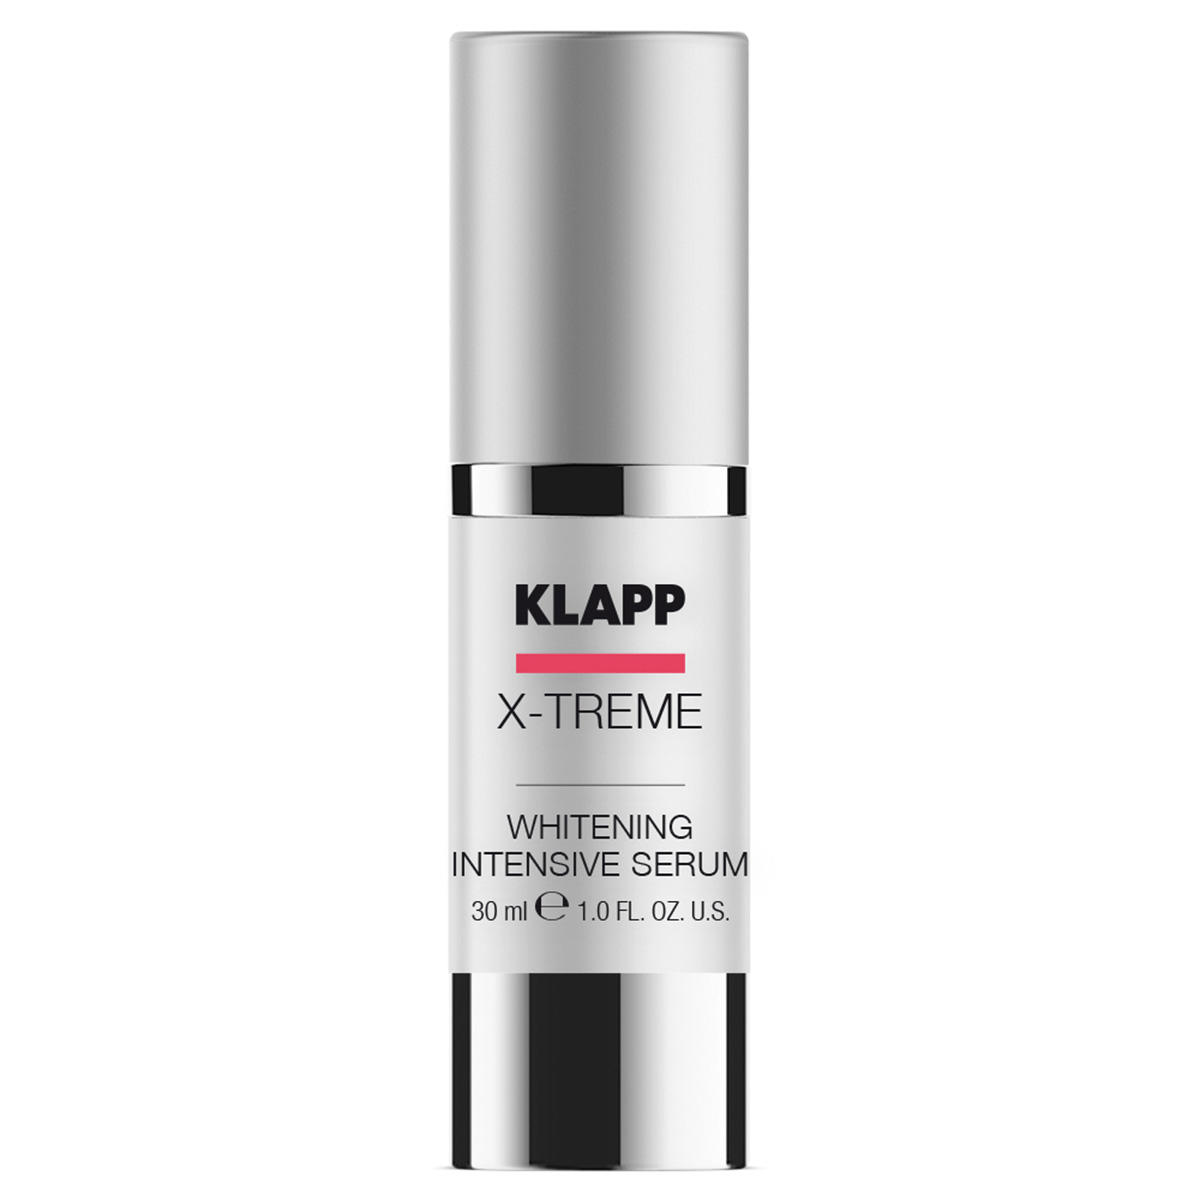 KLAPP X-TREME Whitening Intensive Serum 30 ml - 1